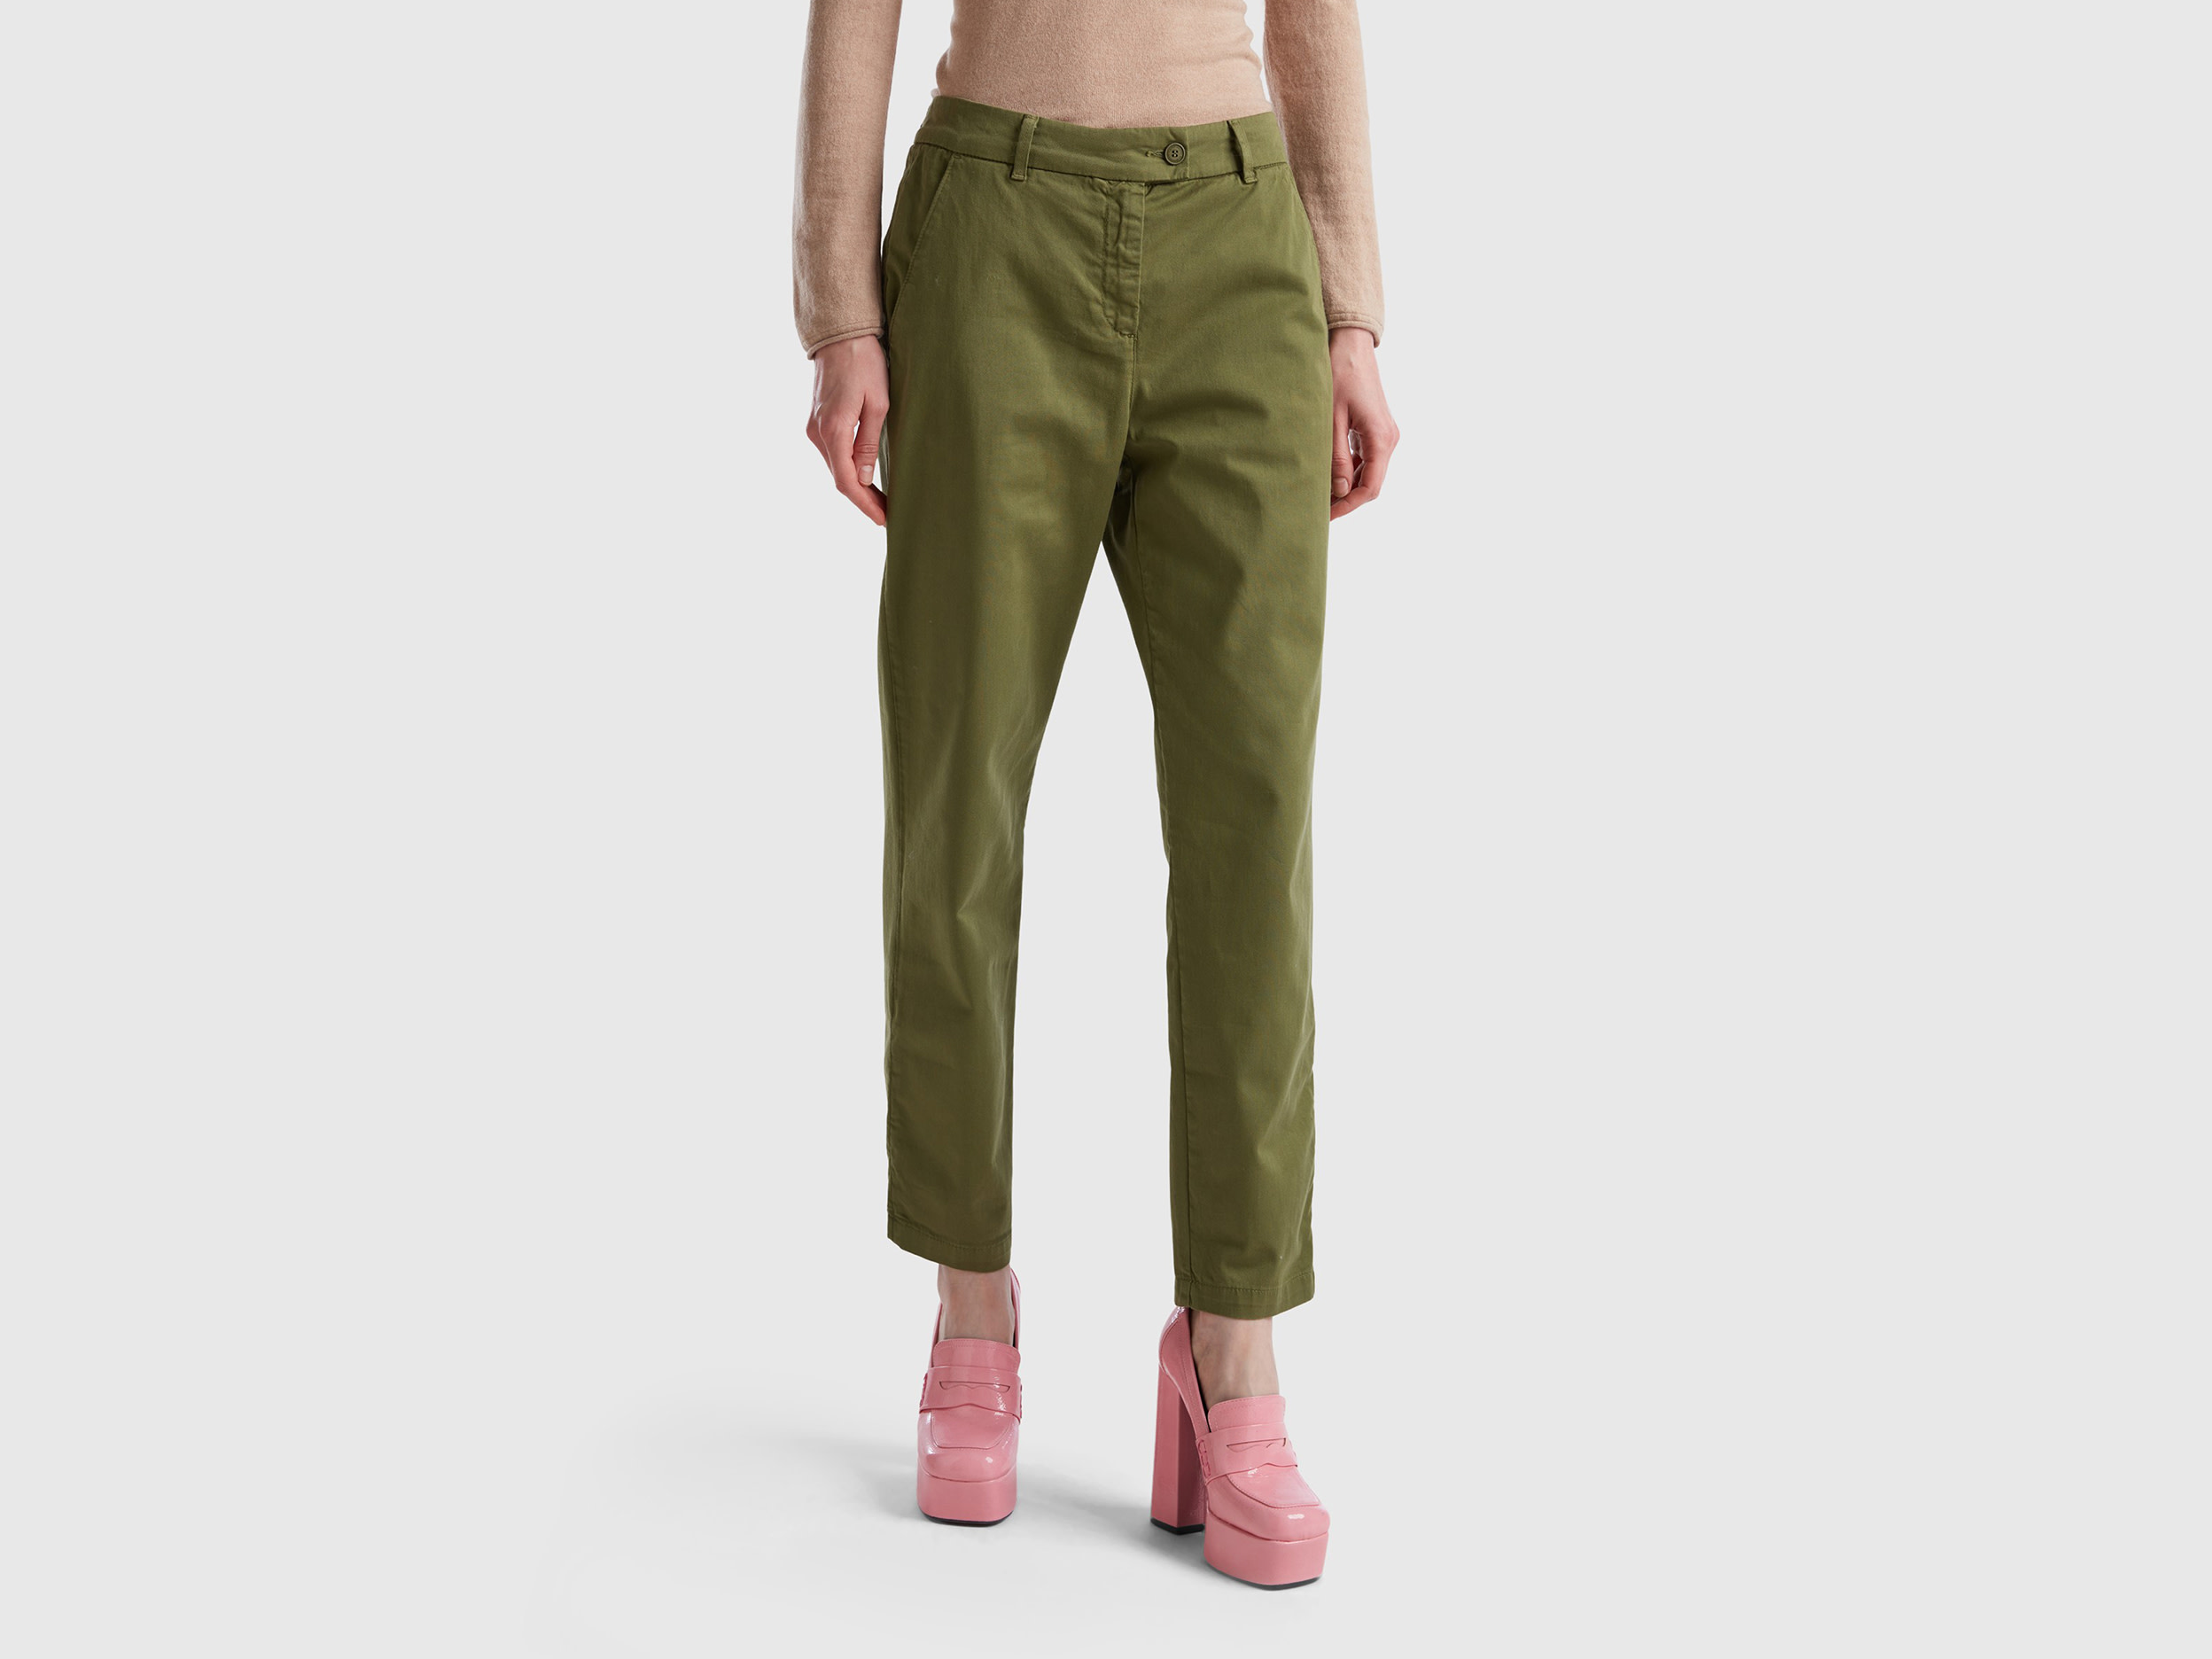 Benetton, Stretch Cotton Chino Trousers, size 8, Military Green, Women